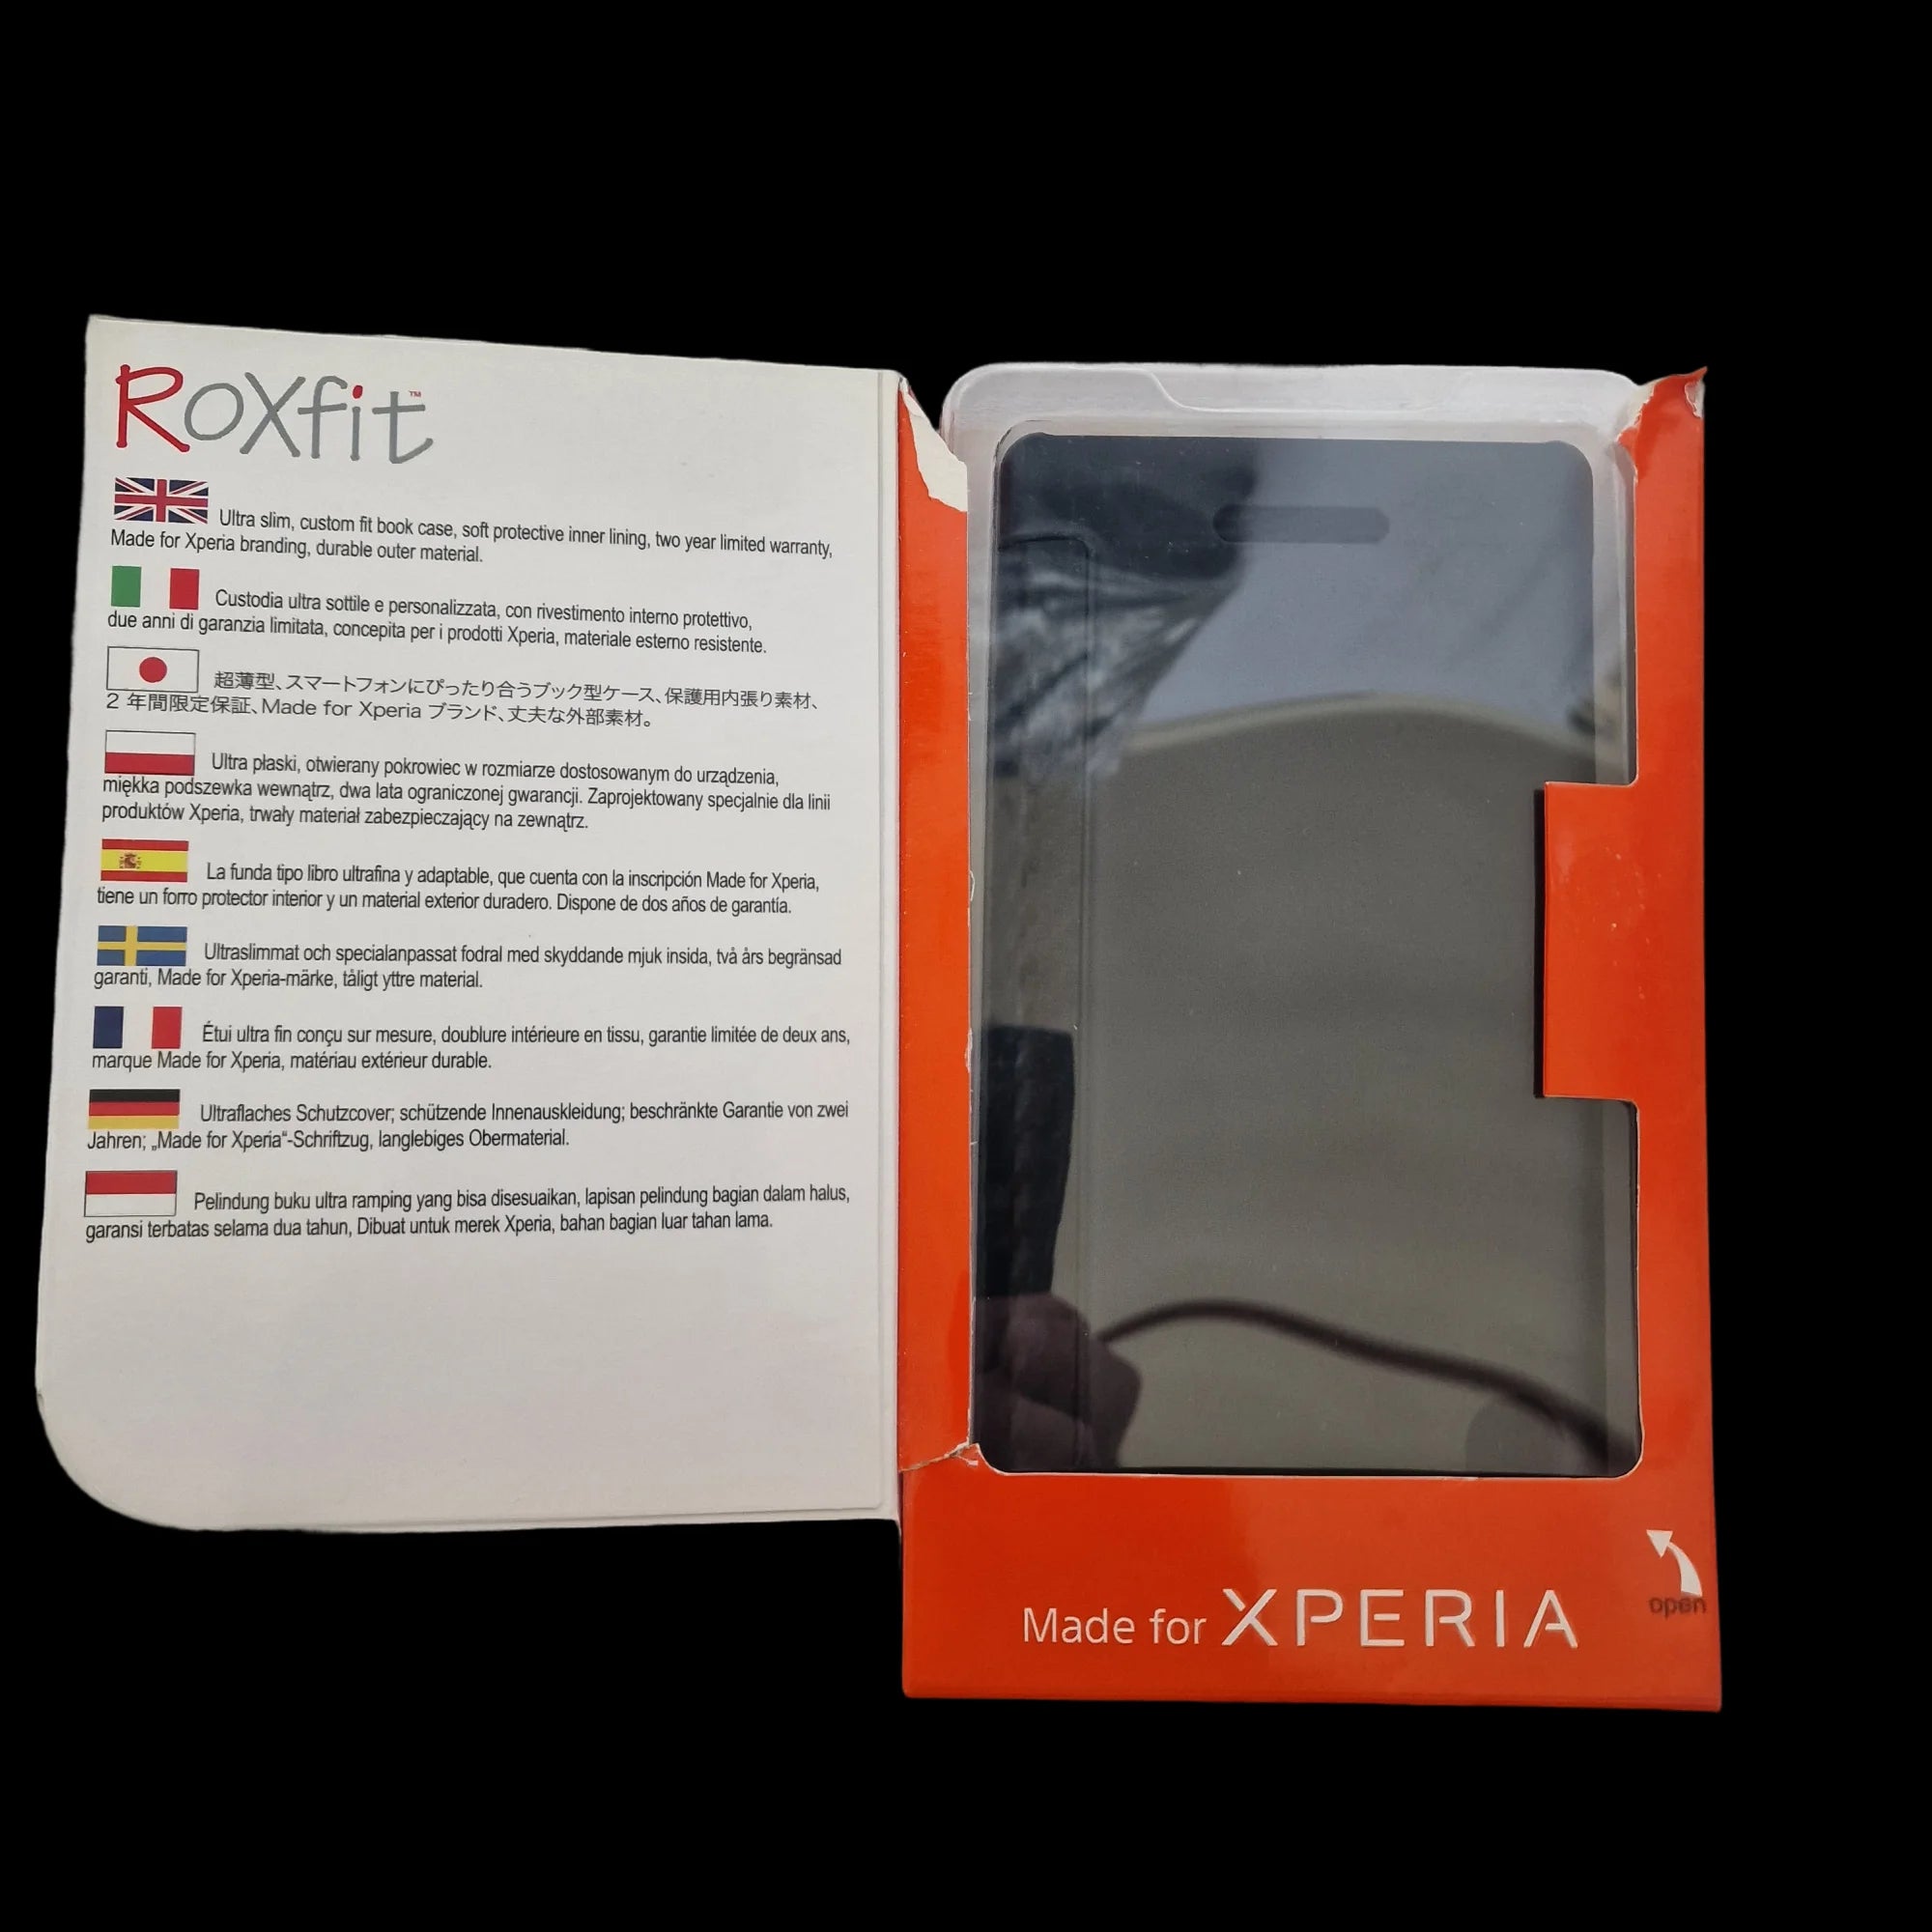 Sony Experia T3 Black Roxfit Mobile Phone Case - 6 - 3197